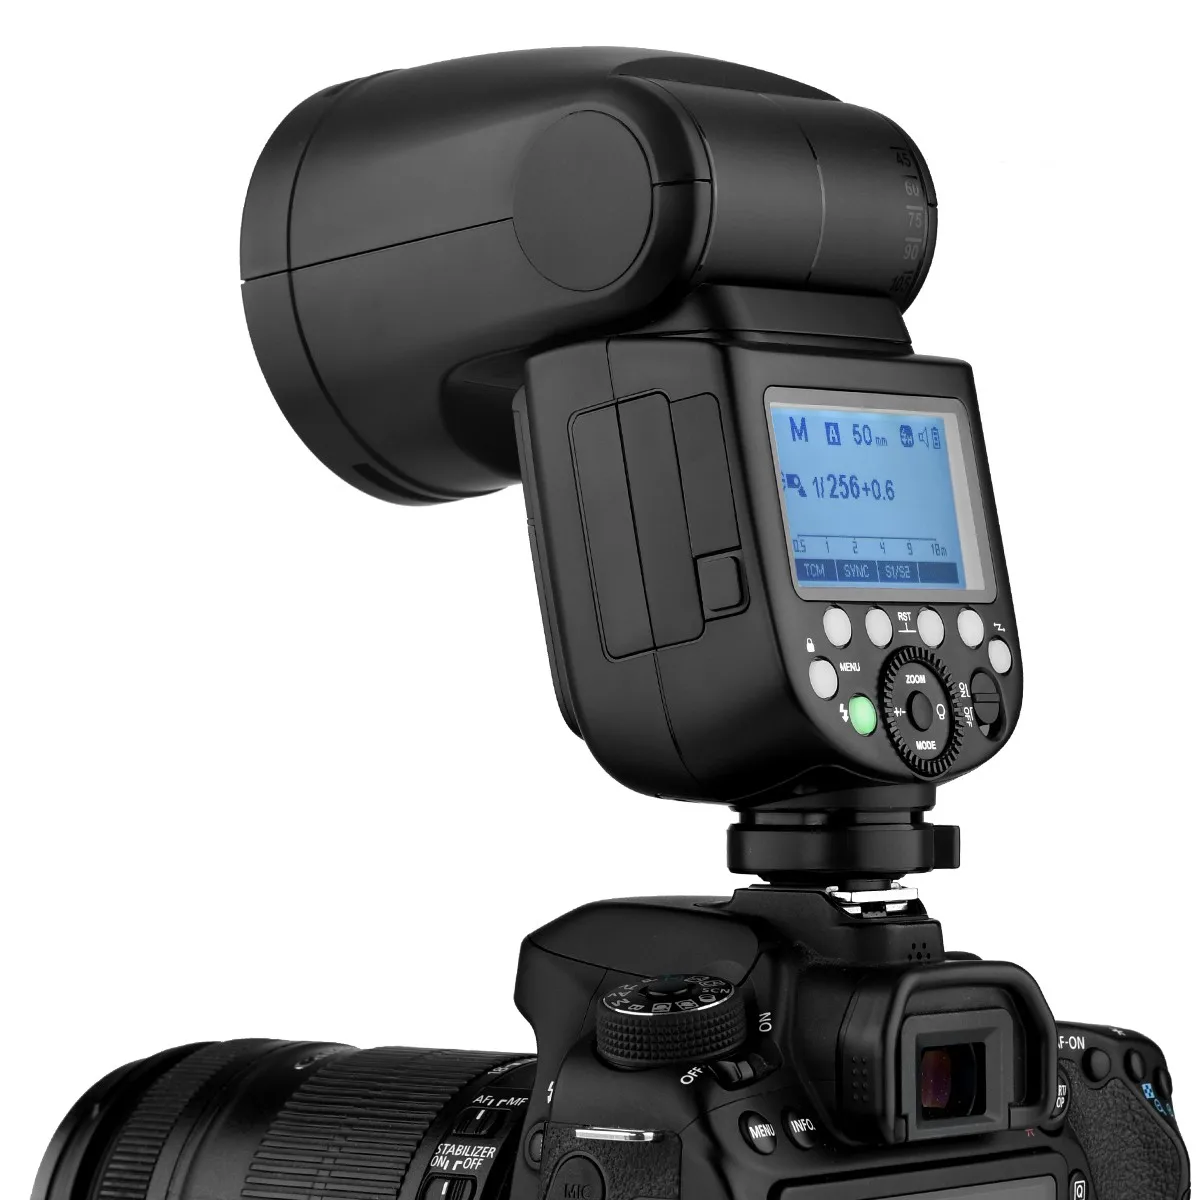 Godox V860III-F Flash for Fujifilm Fuji Camera Flash Speedlite  7.2V/2600mAh, TTL 2.4G Wireless HSS 1/8000 1.5s Recycle Time and 480 Full  Power Flashes